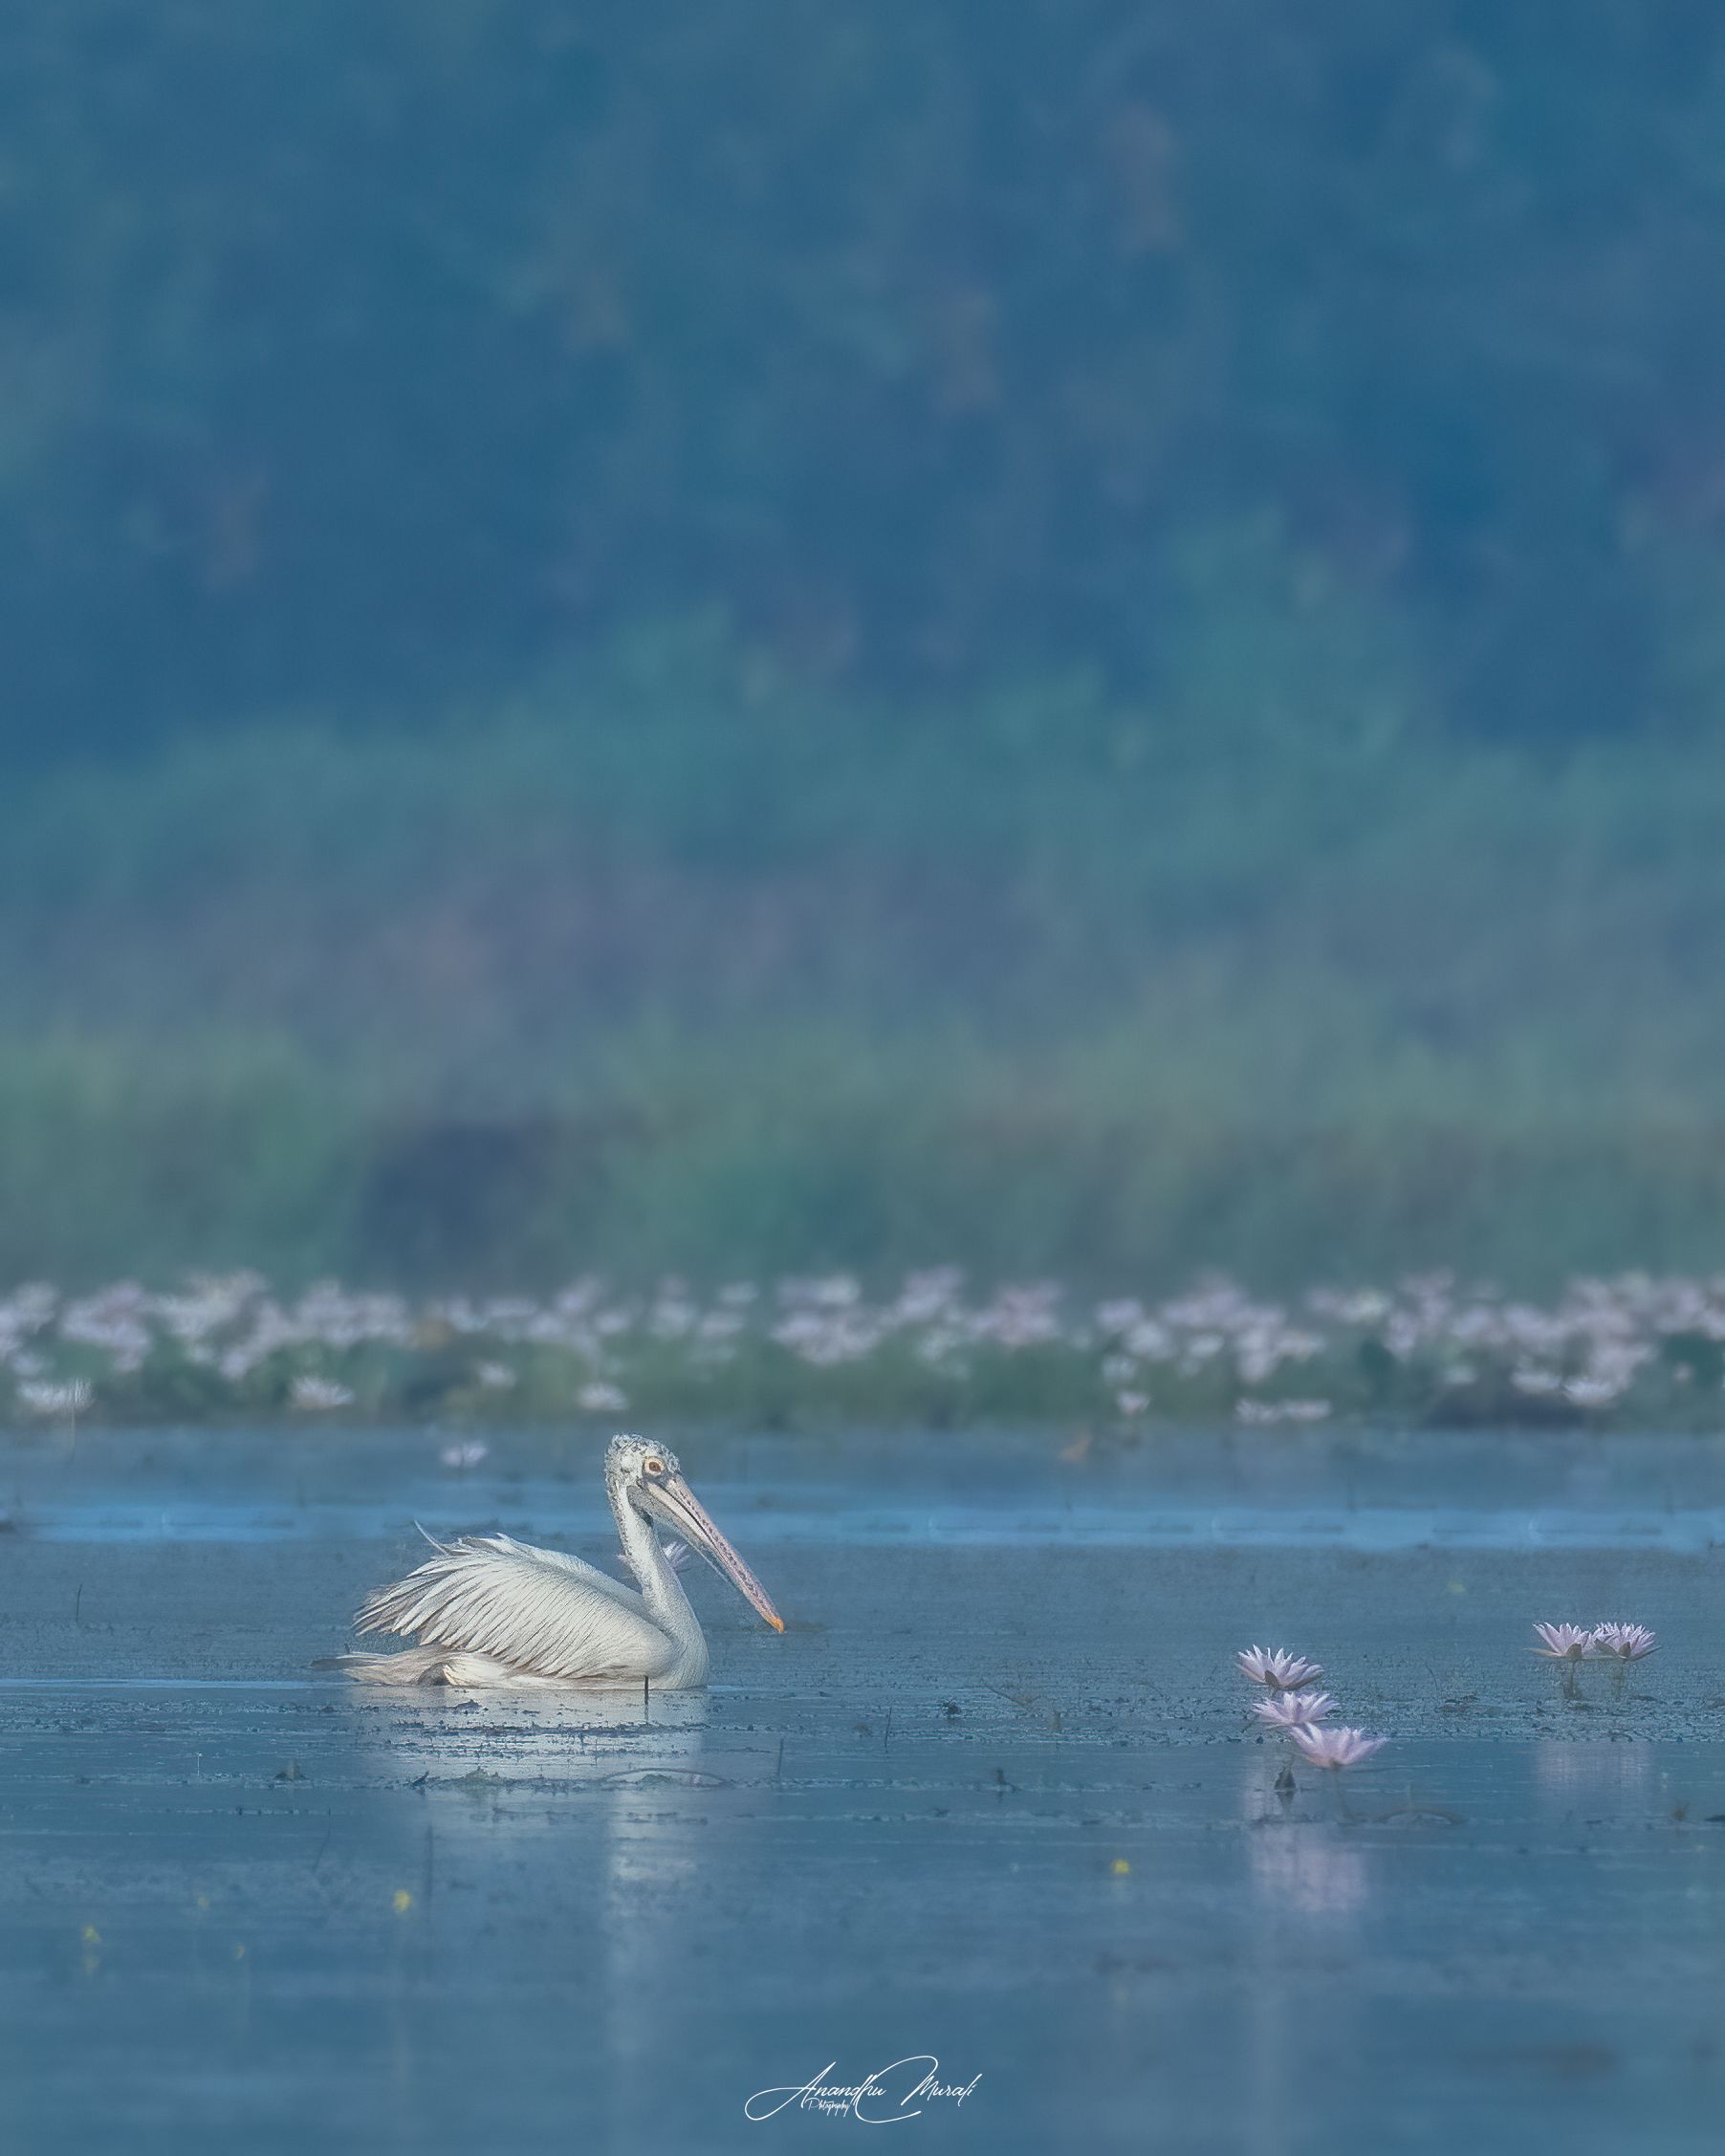 Birds pelican kerala india birdphotography wildlife, Anandhu M